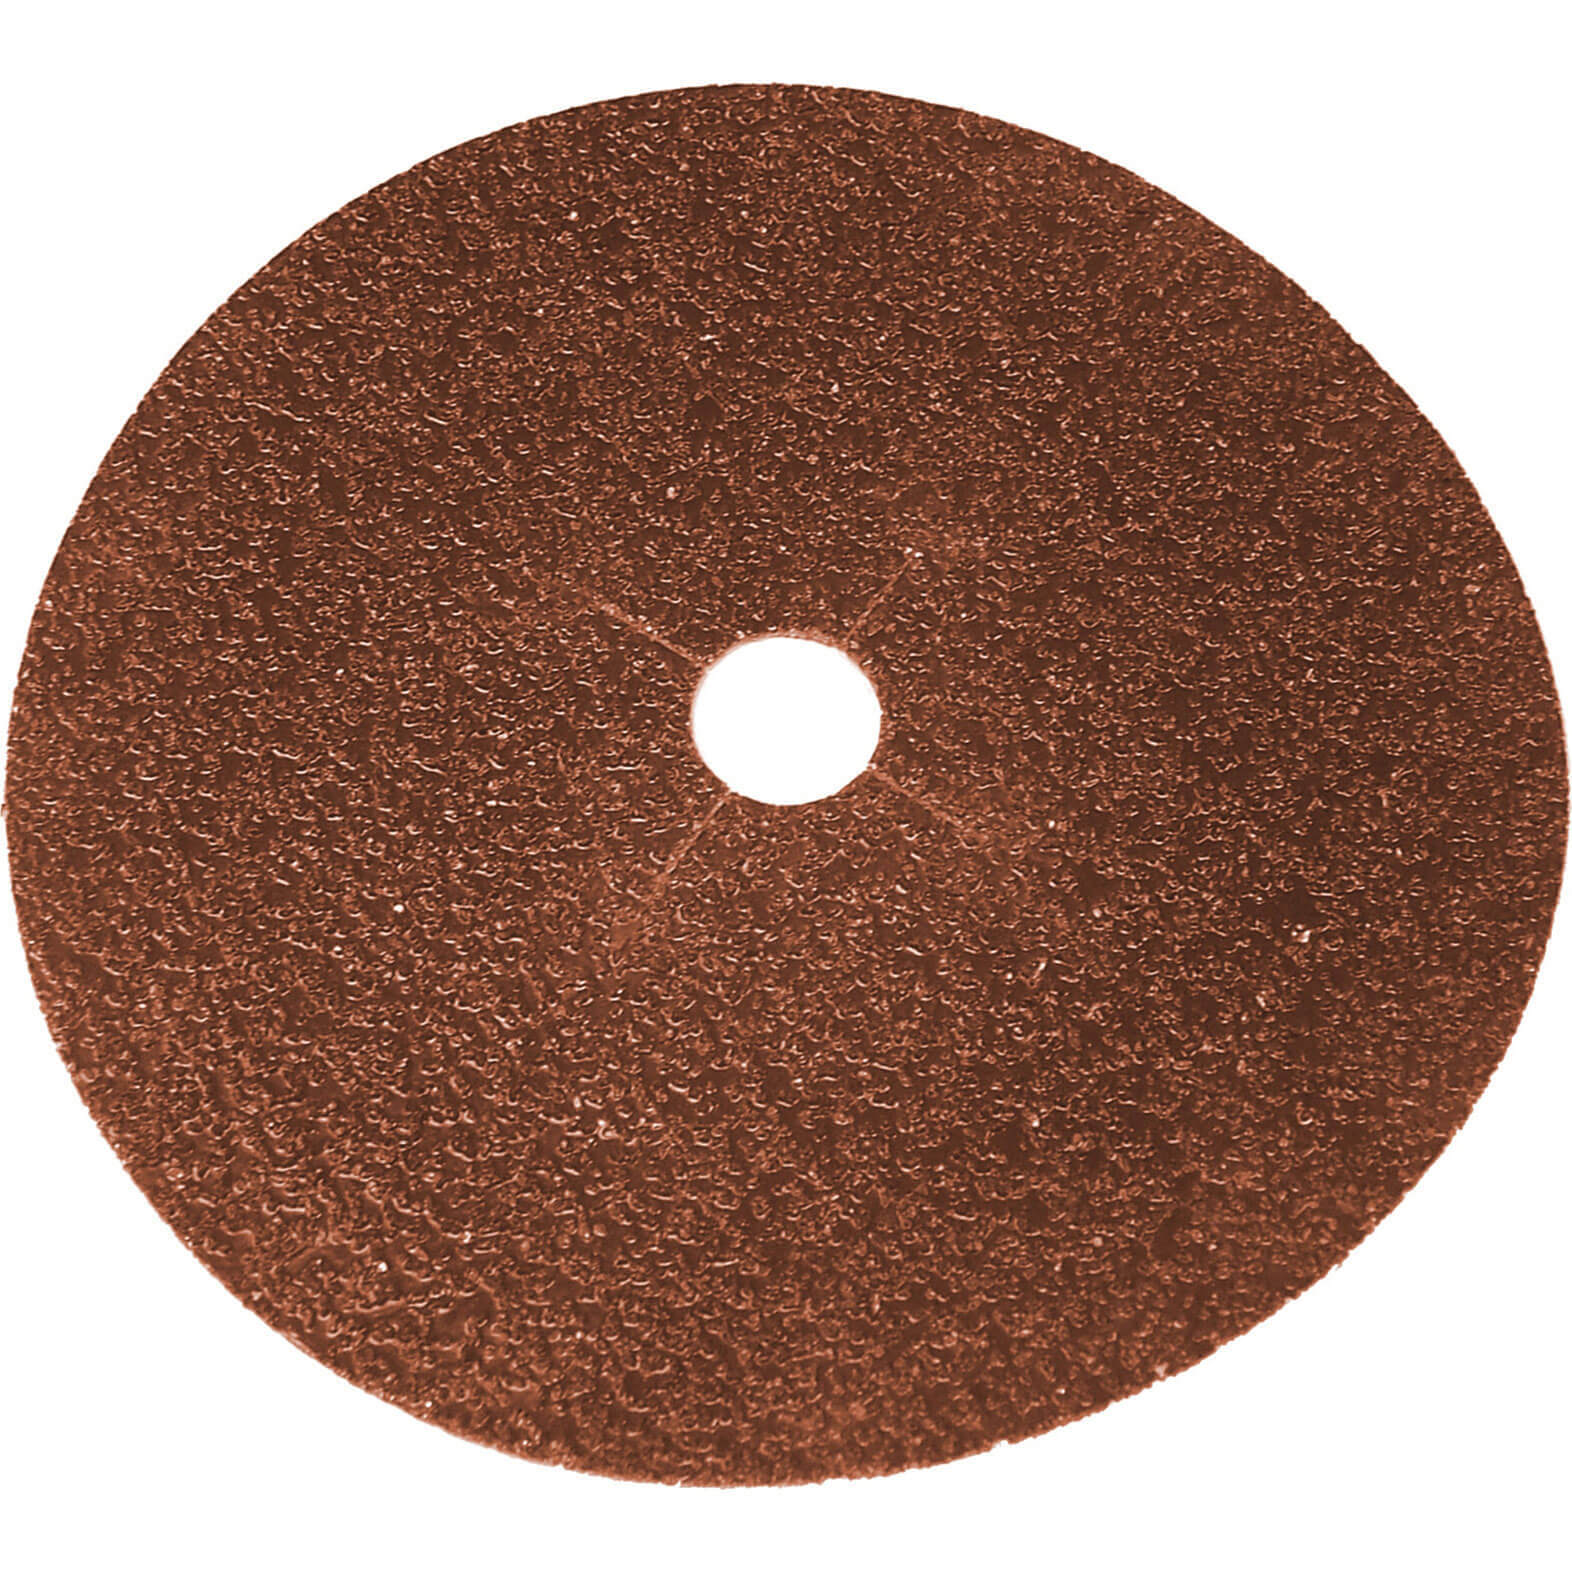 Photo of Faithfull Aluminium Oxide Sanding Discs 178mm 24g